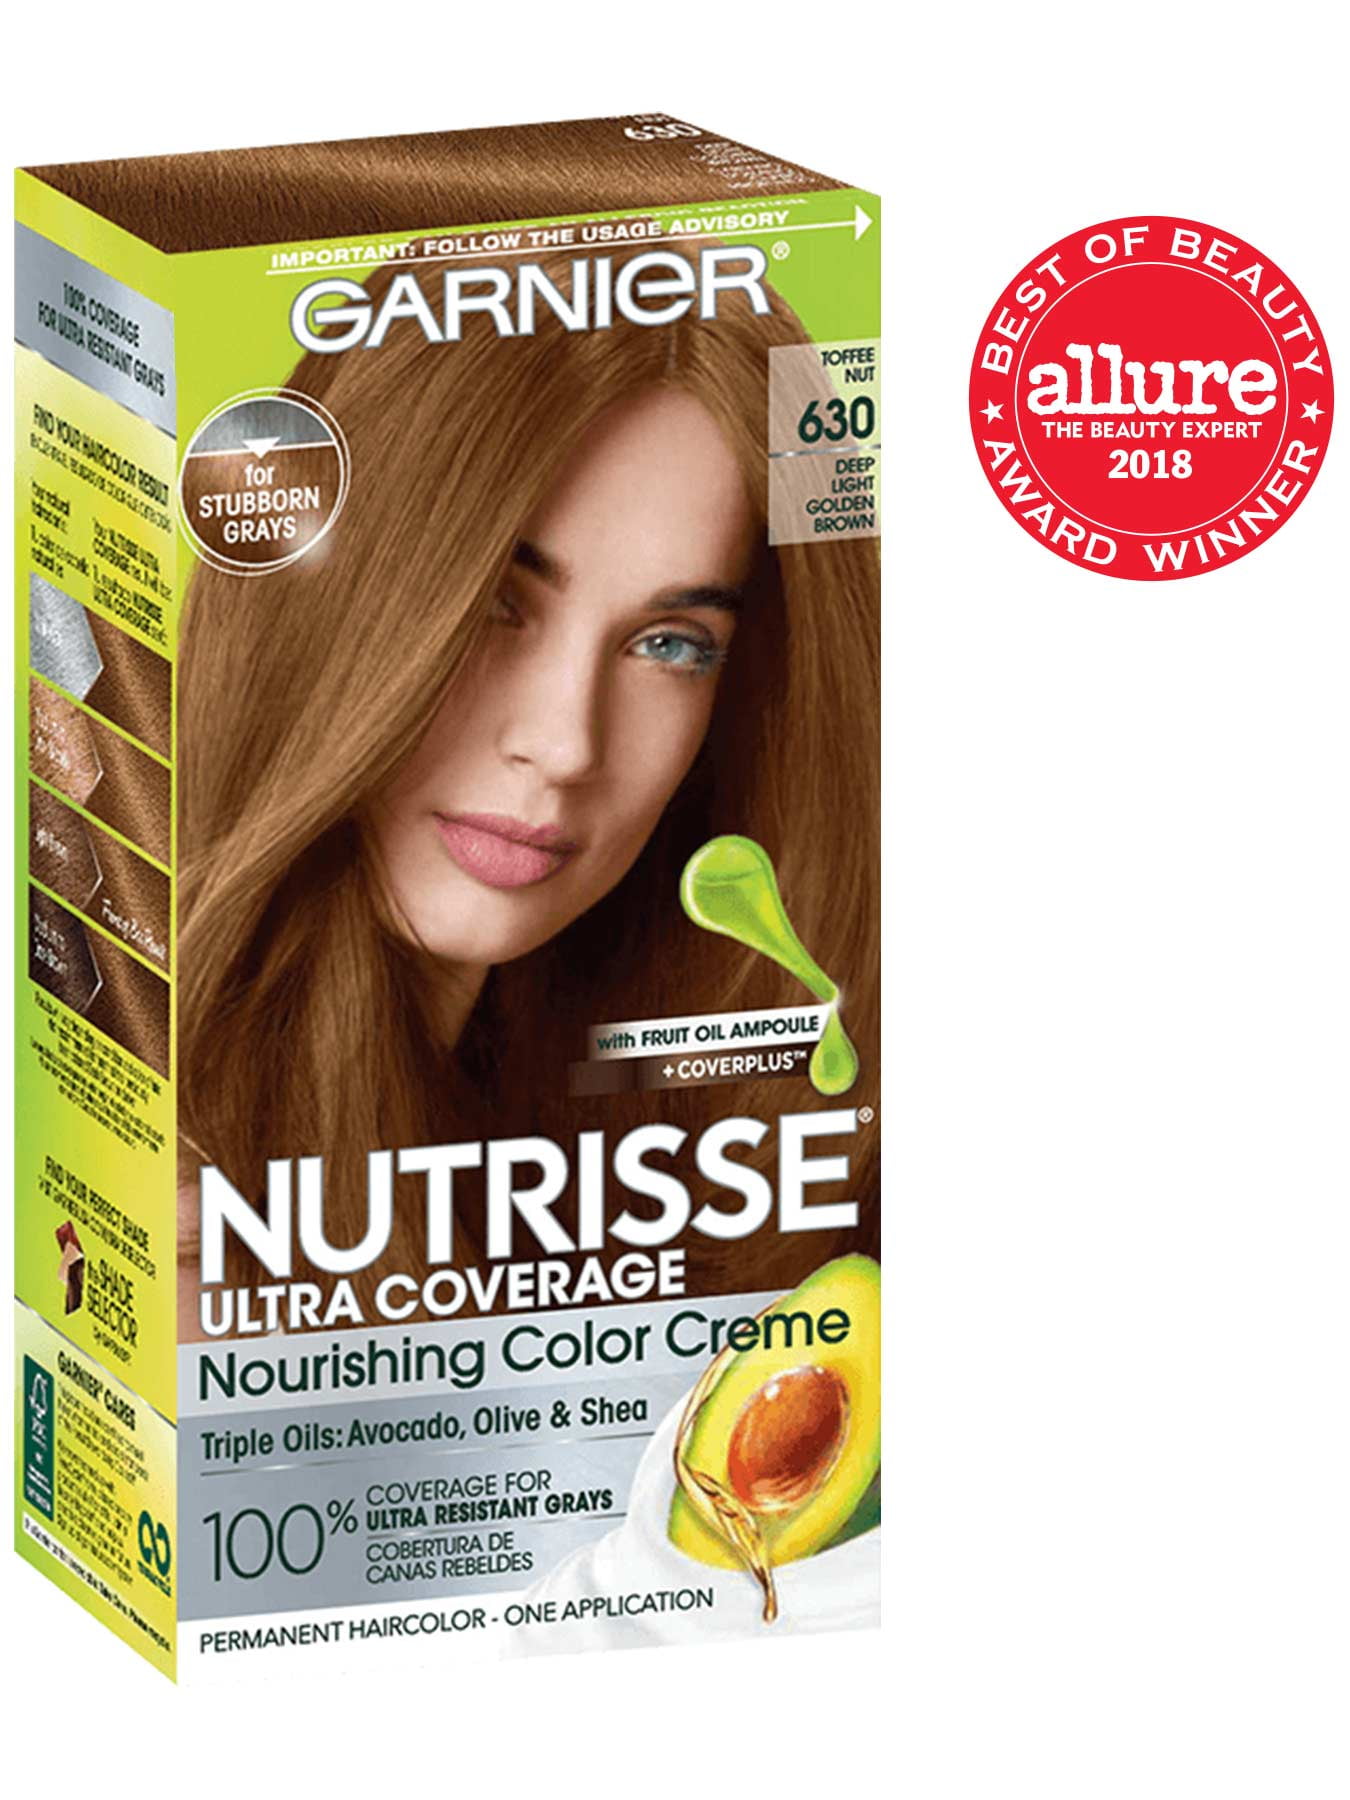 Garnier Nutrisse Hair Color Chart